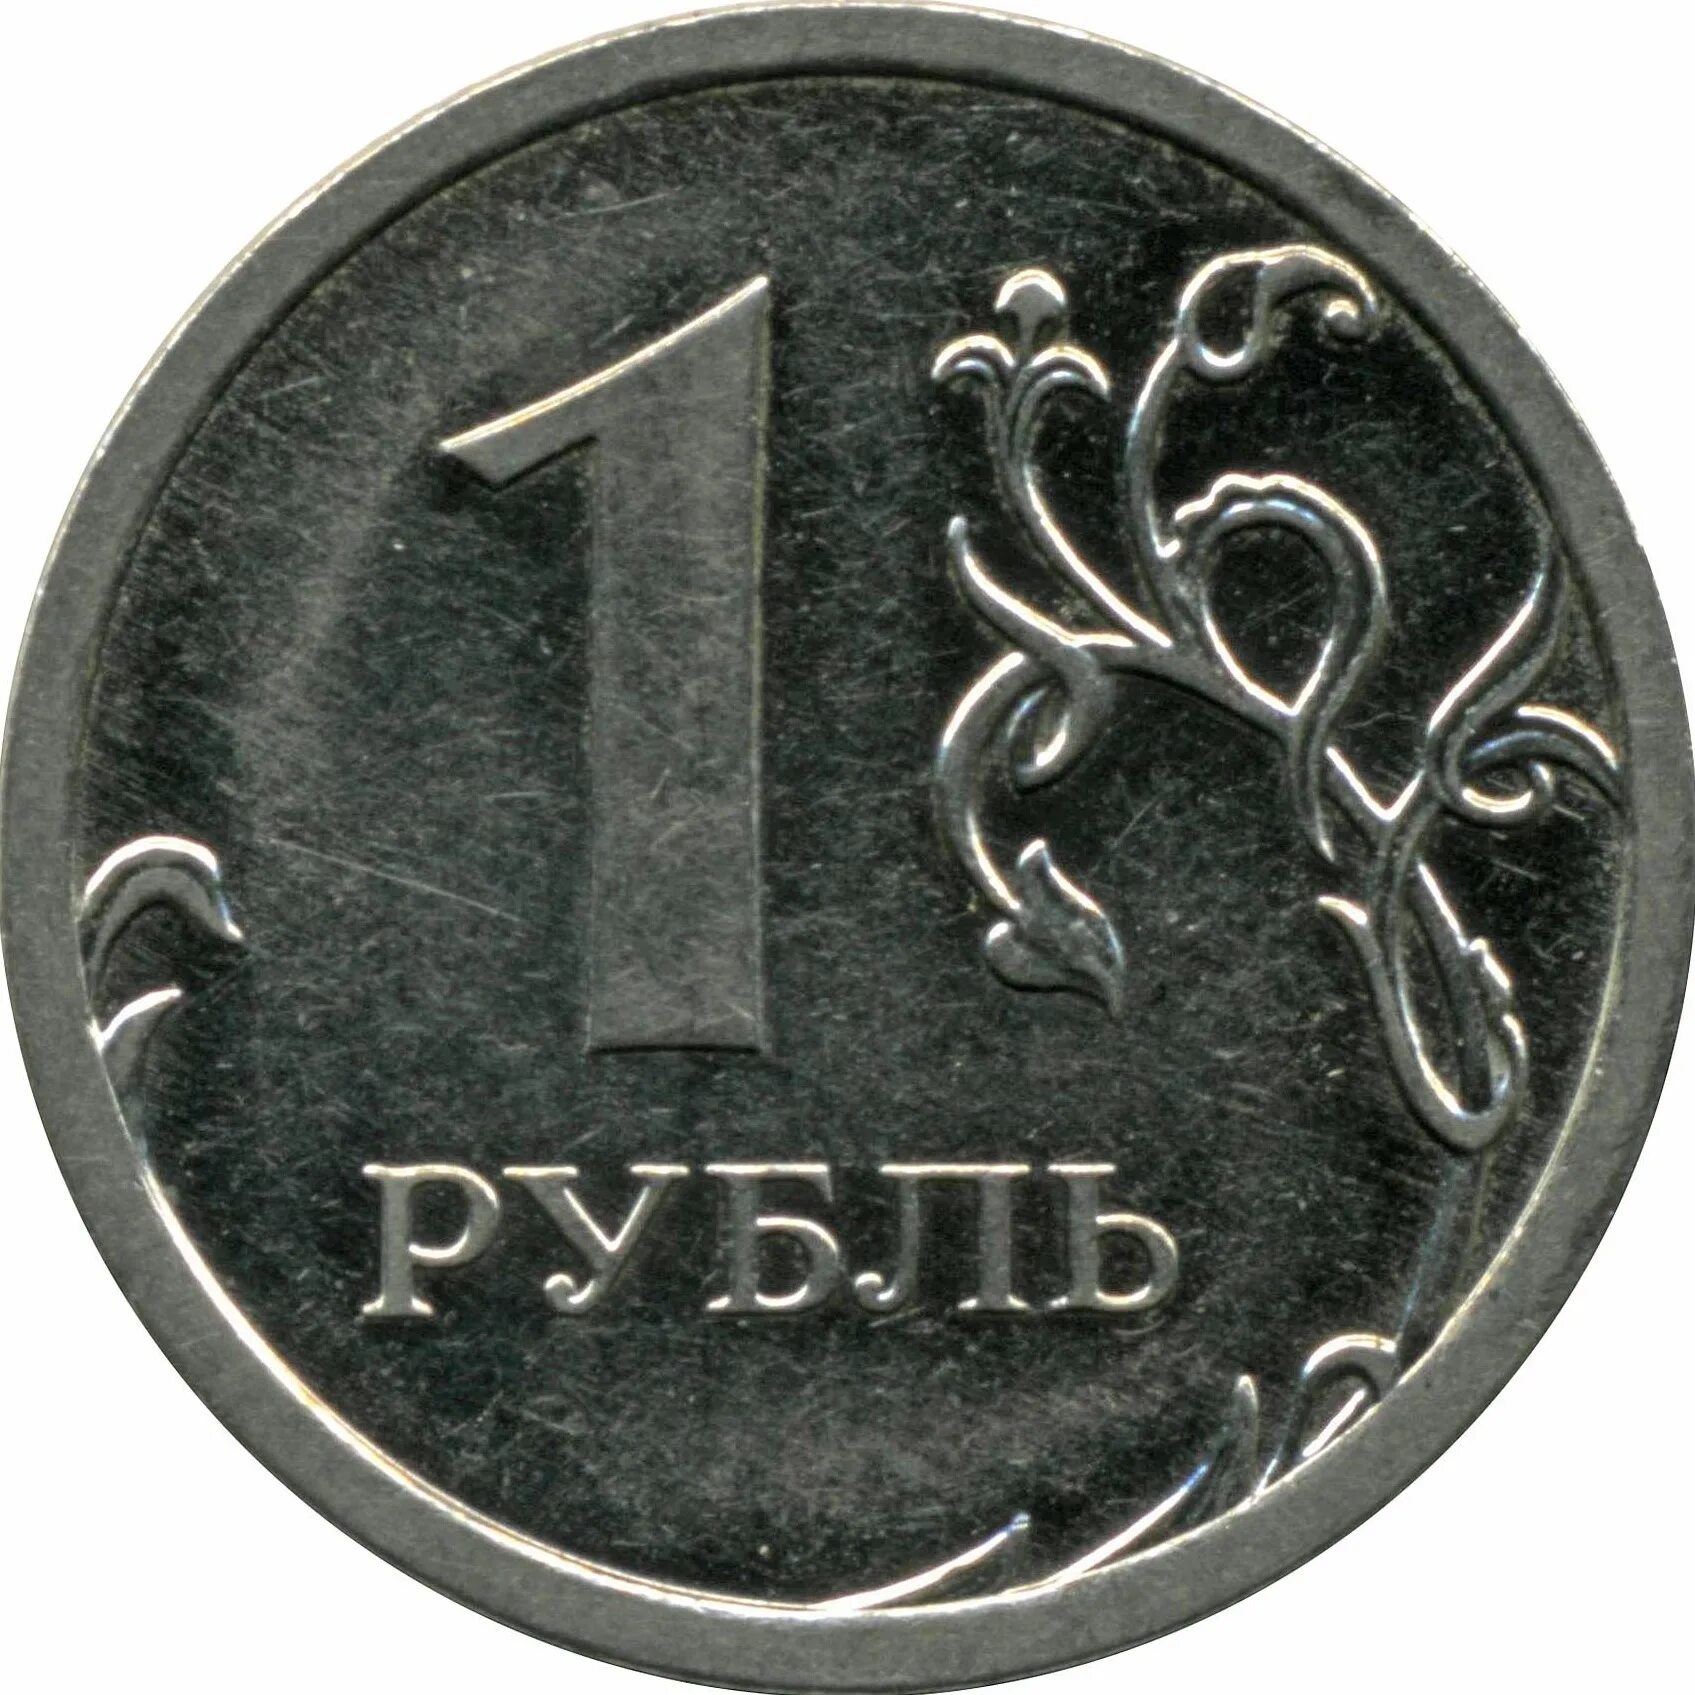 На рубле без руб. 1 Рубль. Монета 1 рубль. Монета 1 рубль на прозрачном фоне. Монеты России 1 рубль.